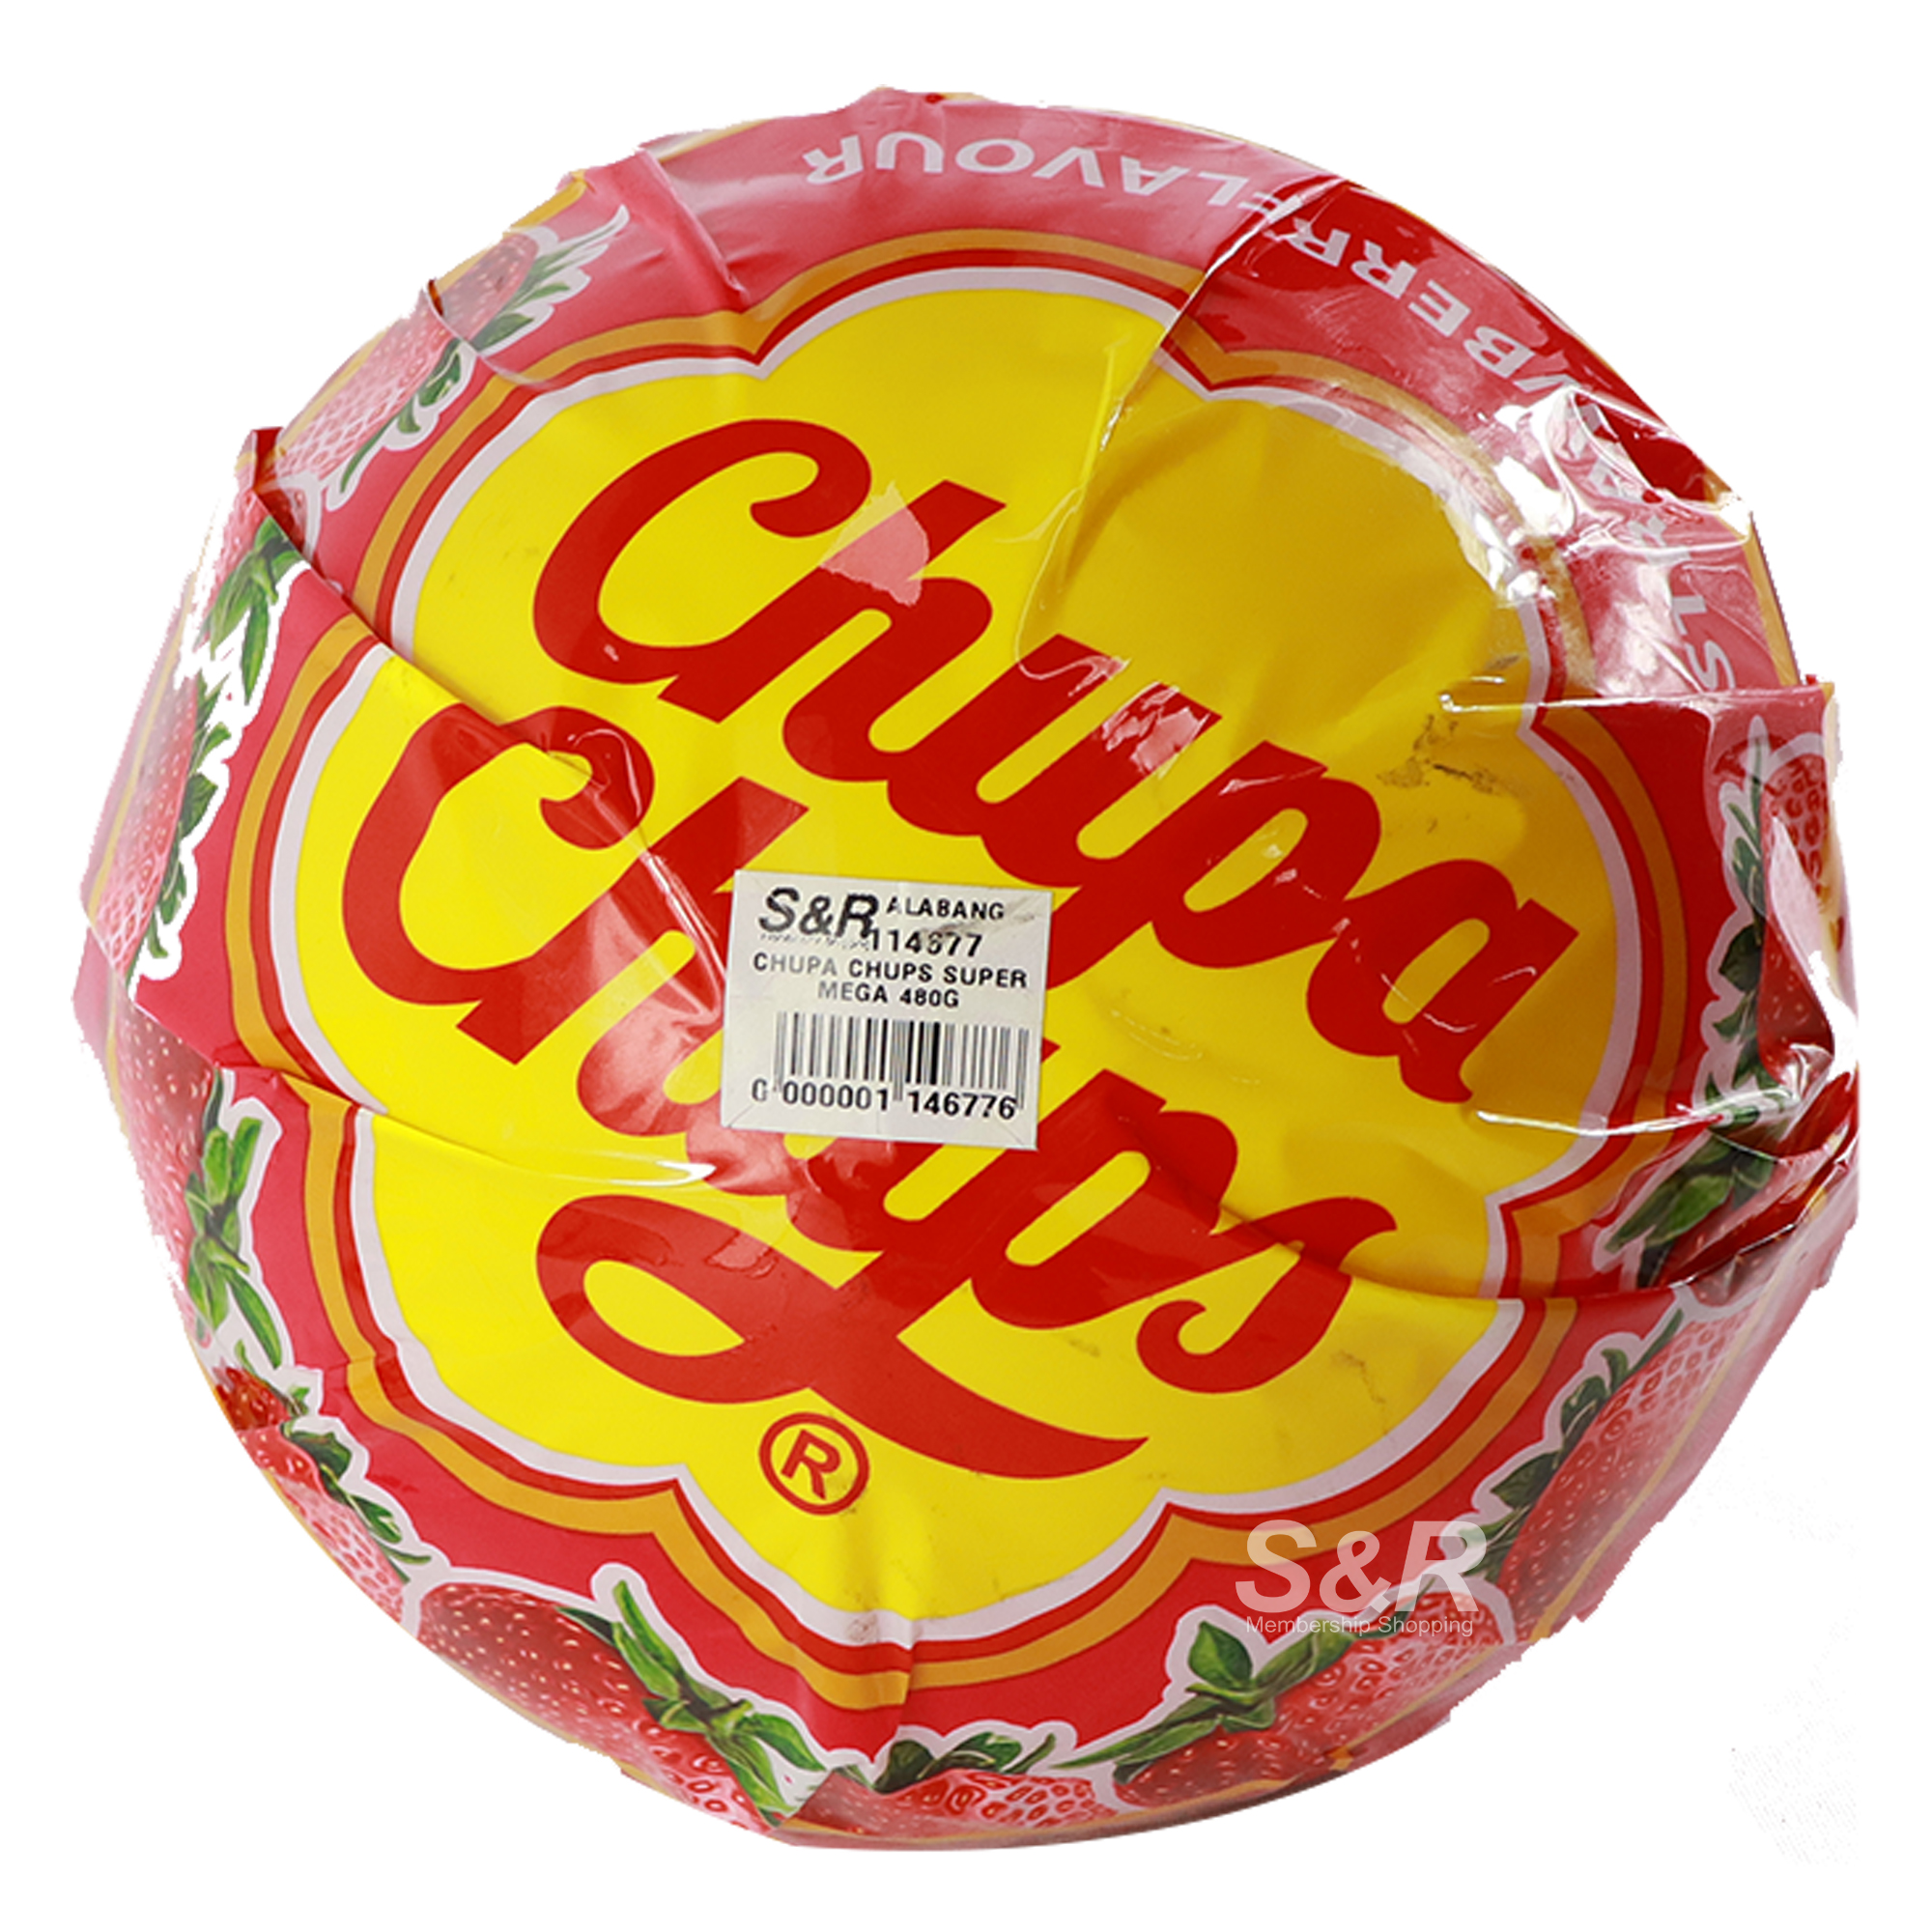 Chupa Chups Super Mega 480g